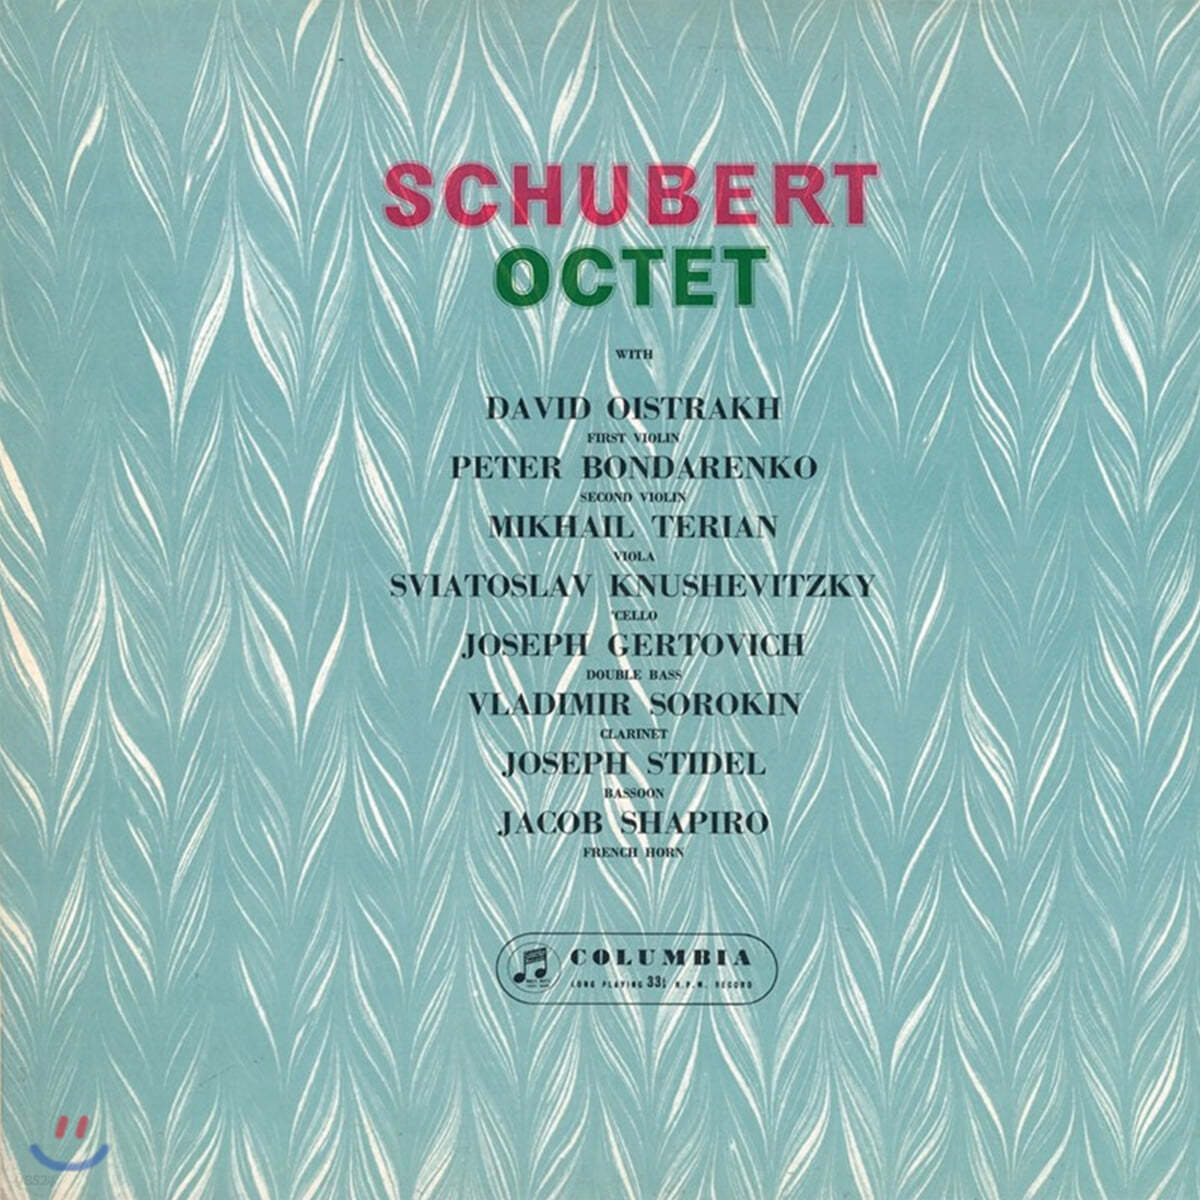 David Oistrakh 슈베르트: 8중주 (Schubert: Octet in F major, Op.166) [LP]